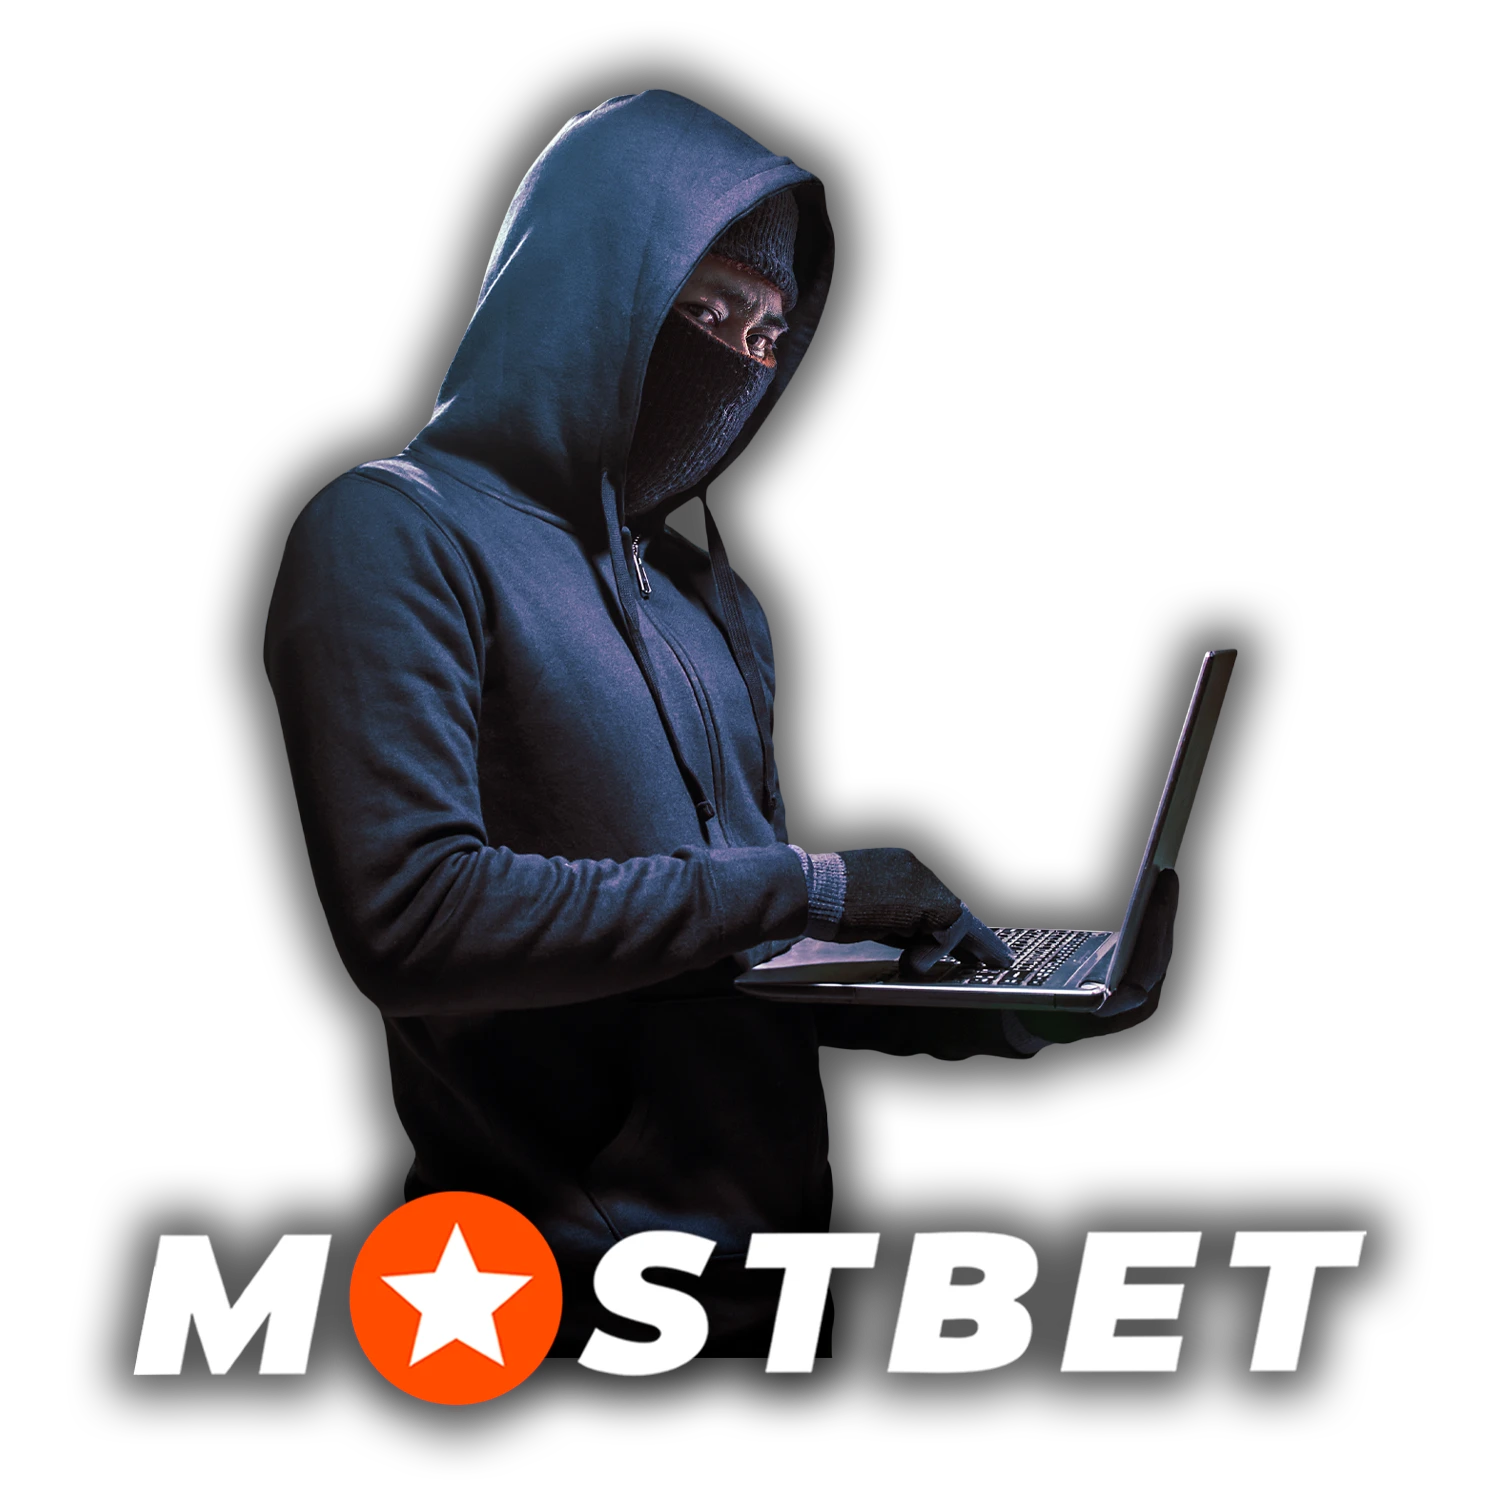 Saiba como evitar fraudes ao apostar na Mostbet.